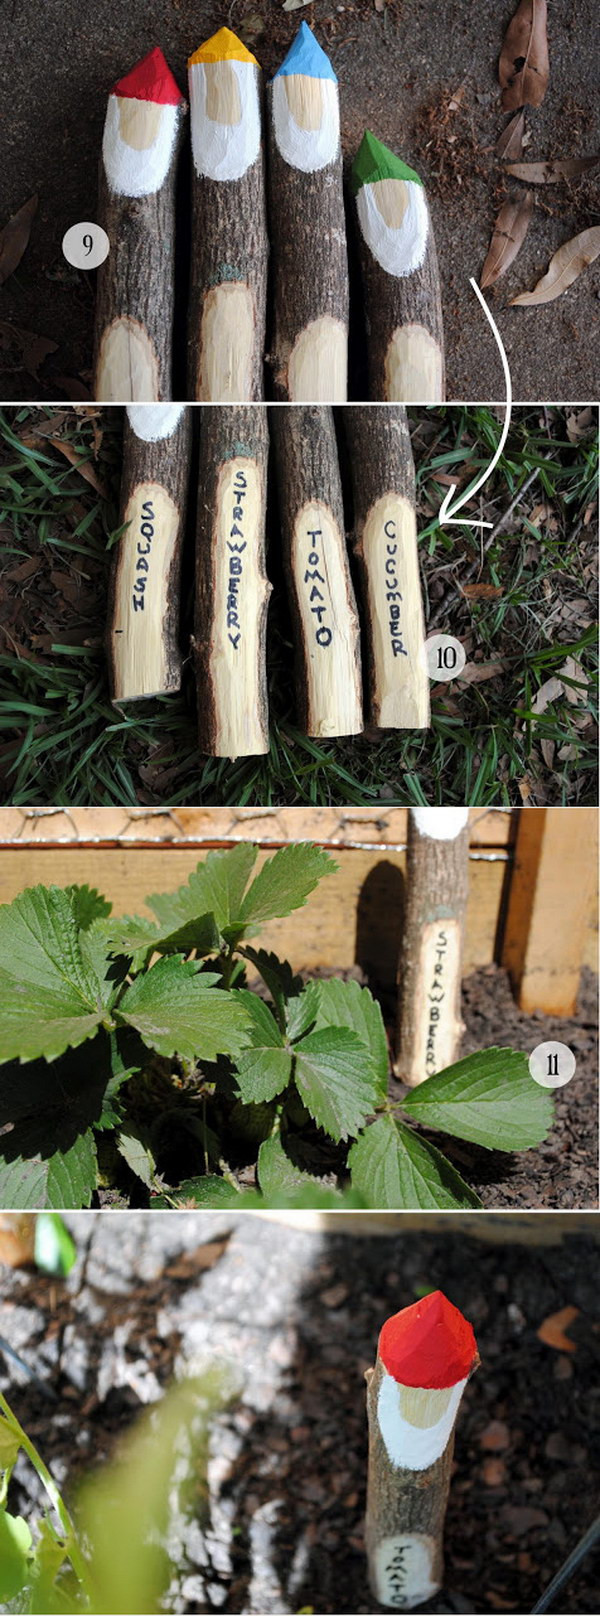 DIY Garden Markers
 30 DIY Plant Label & Marker Ideas For Your Garden Hative